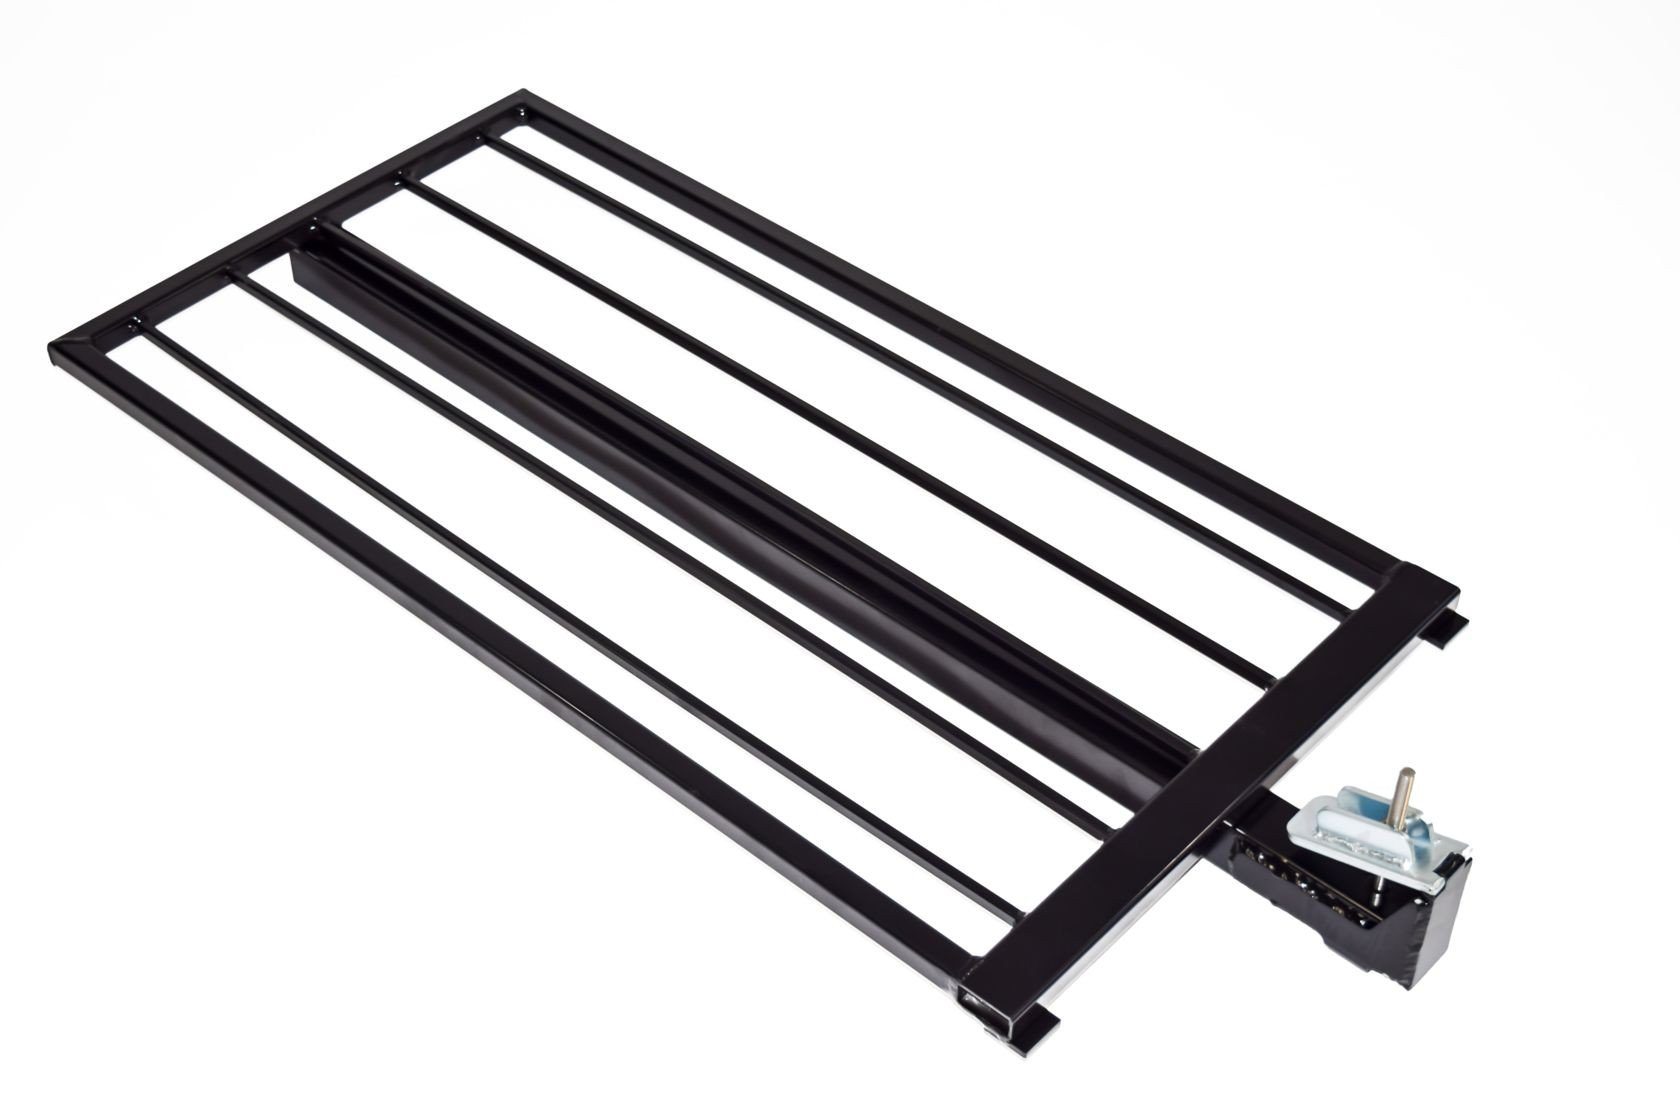 Aluminum Guardrail Frame (Code compliant for public use) Black Finish 2'x42